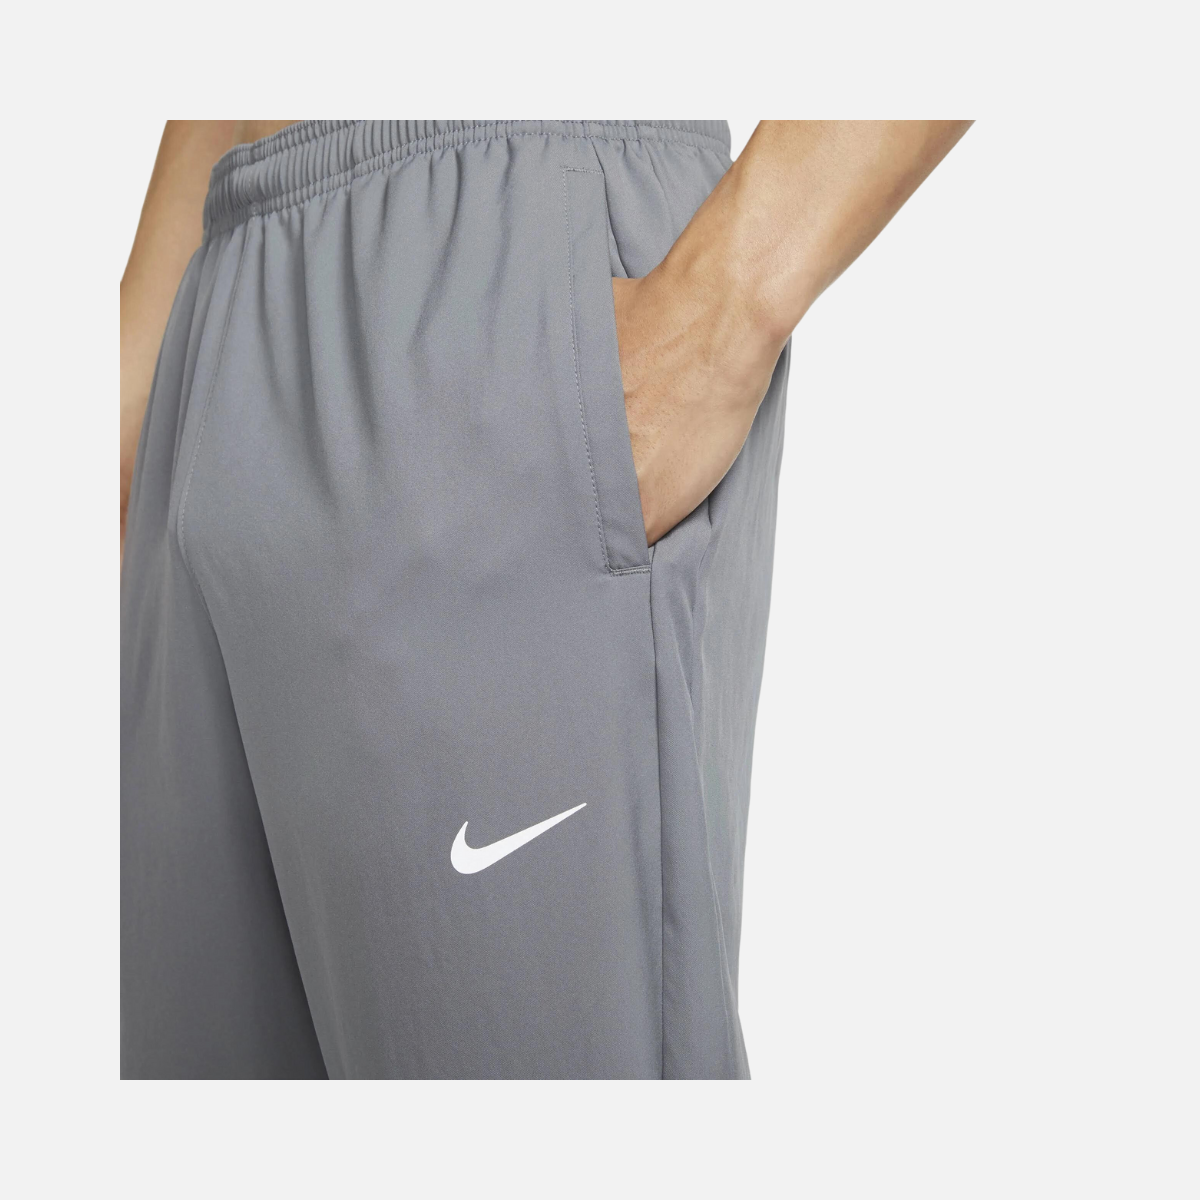 Nike Dri-Fit Chllgr Mens Pant -Autumn Gray